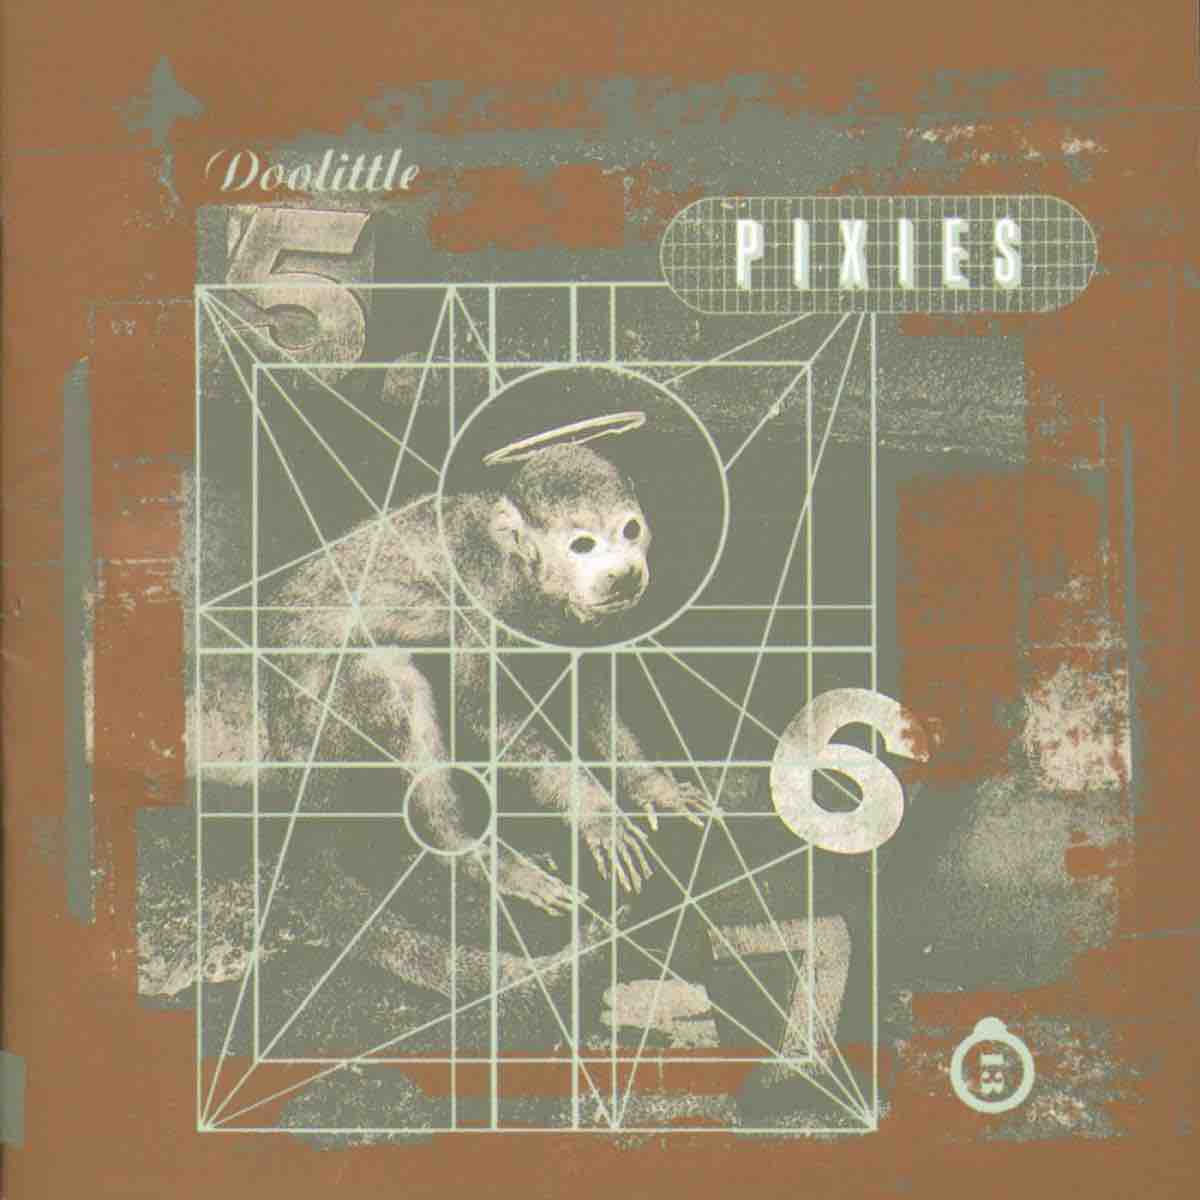 Pixies - Doolittle LP